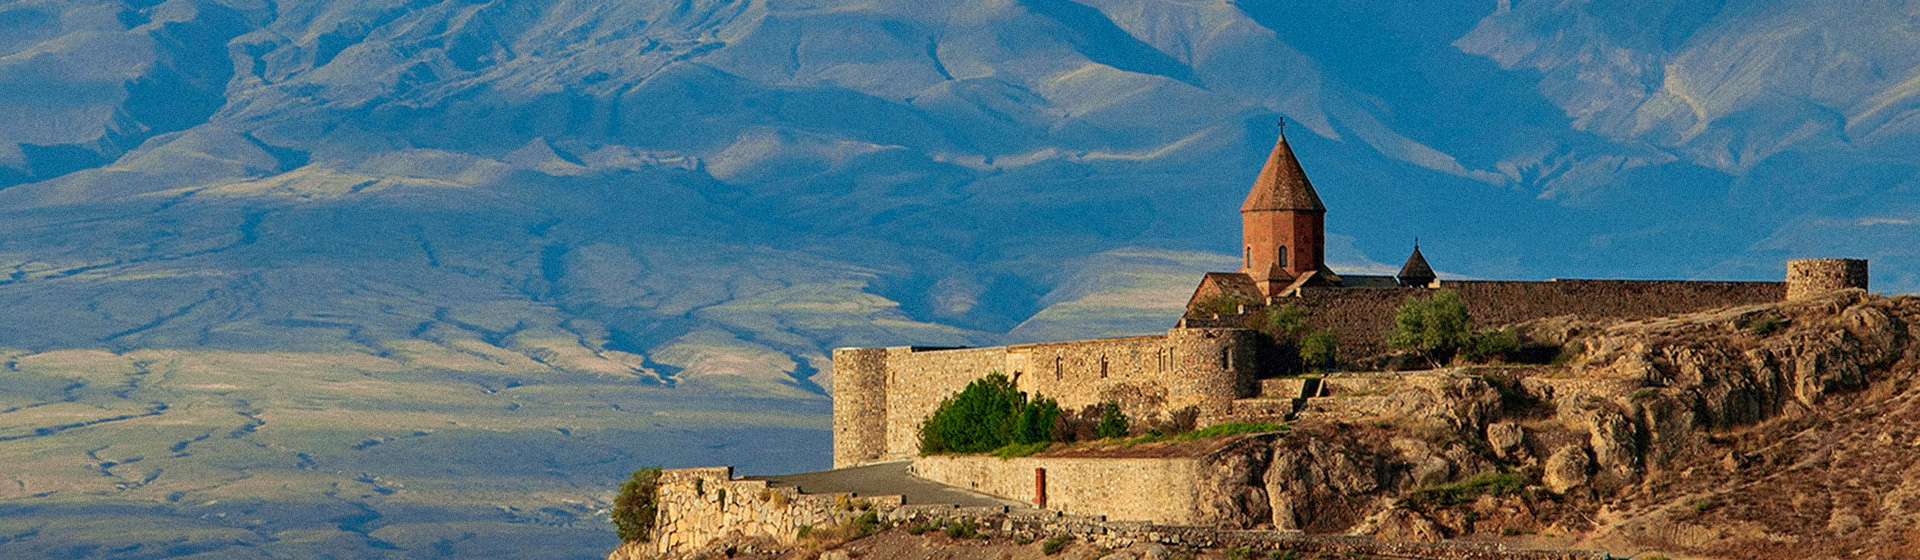 concierge travel armenia tour agency